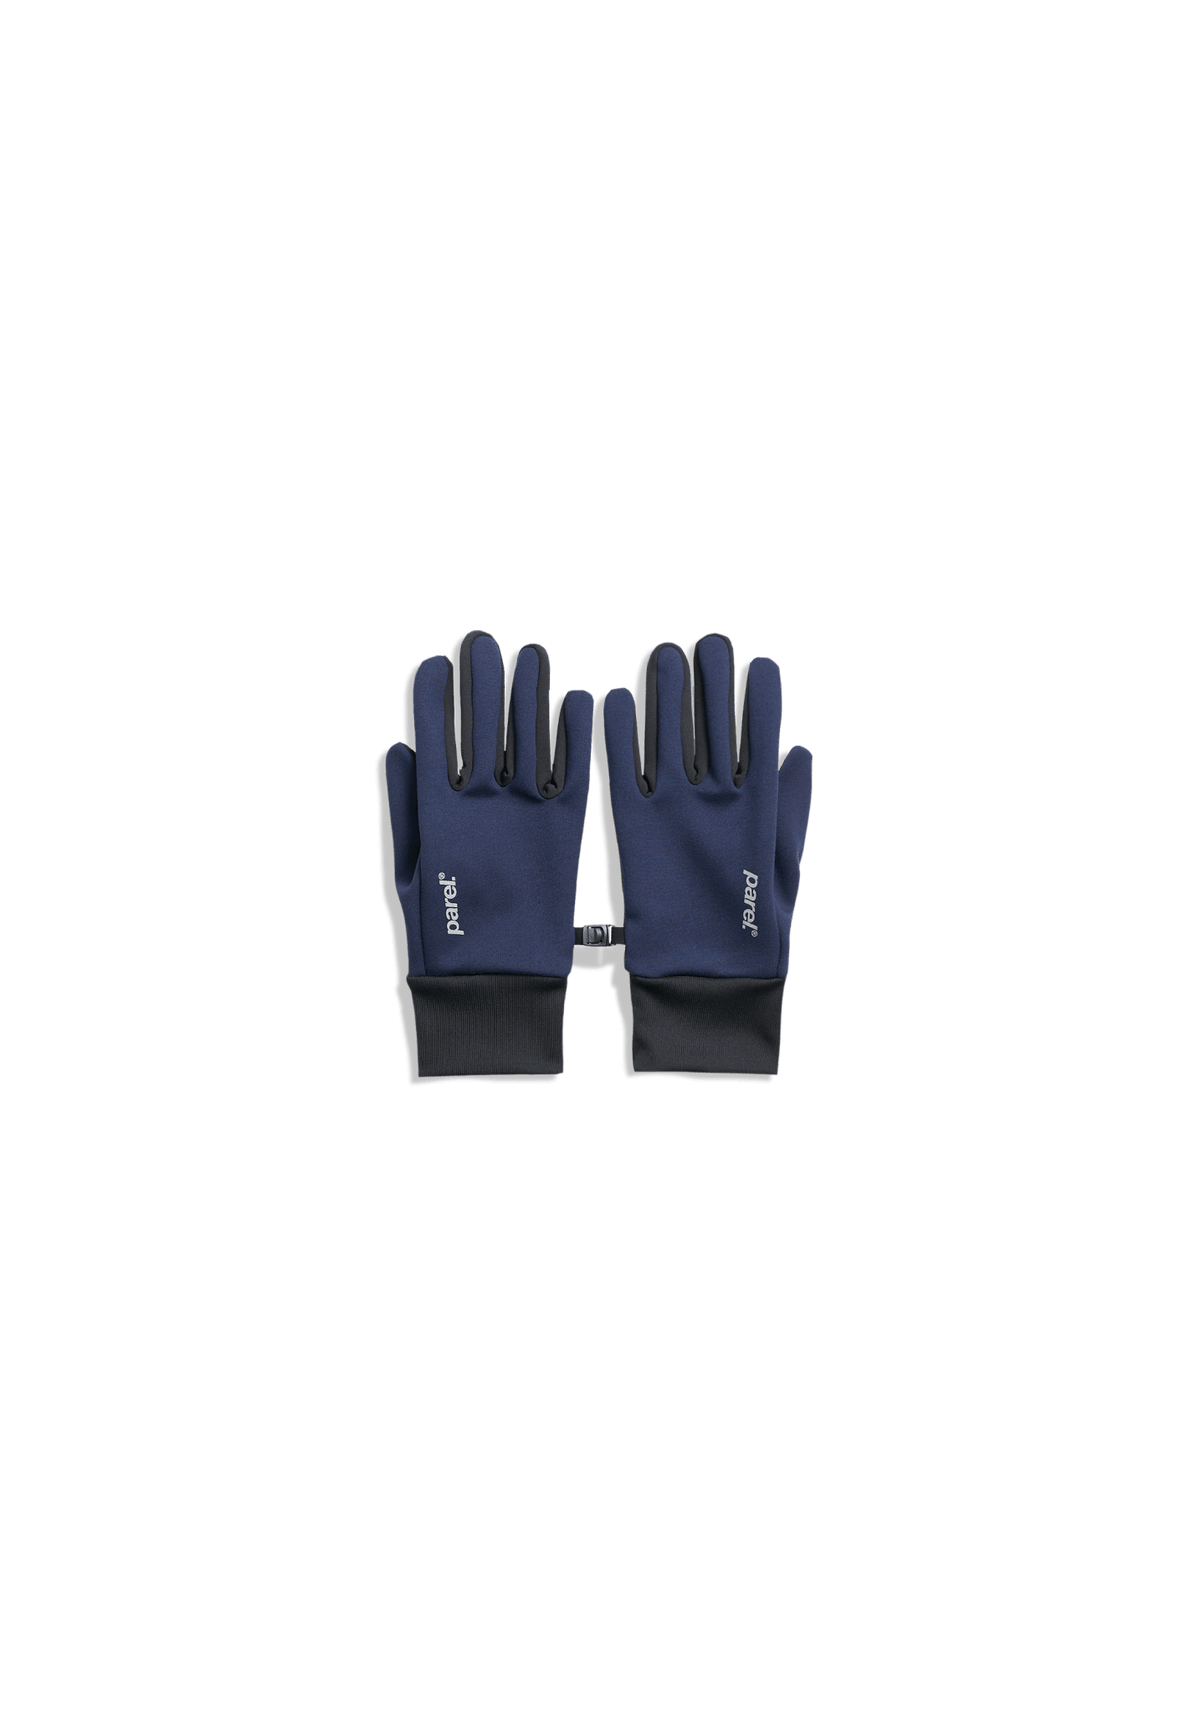 Tech Gloves - Navy/Black